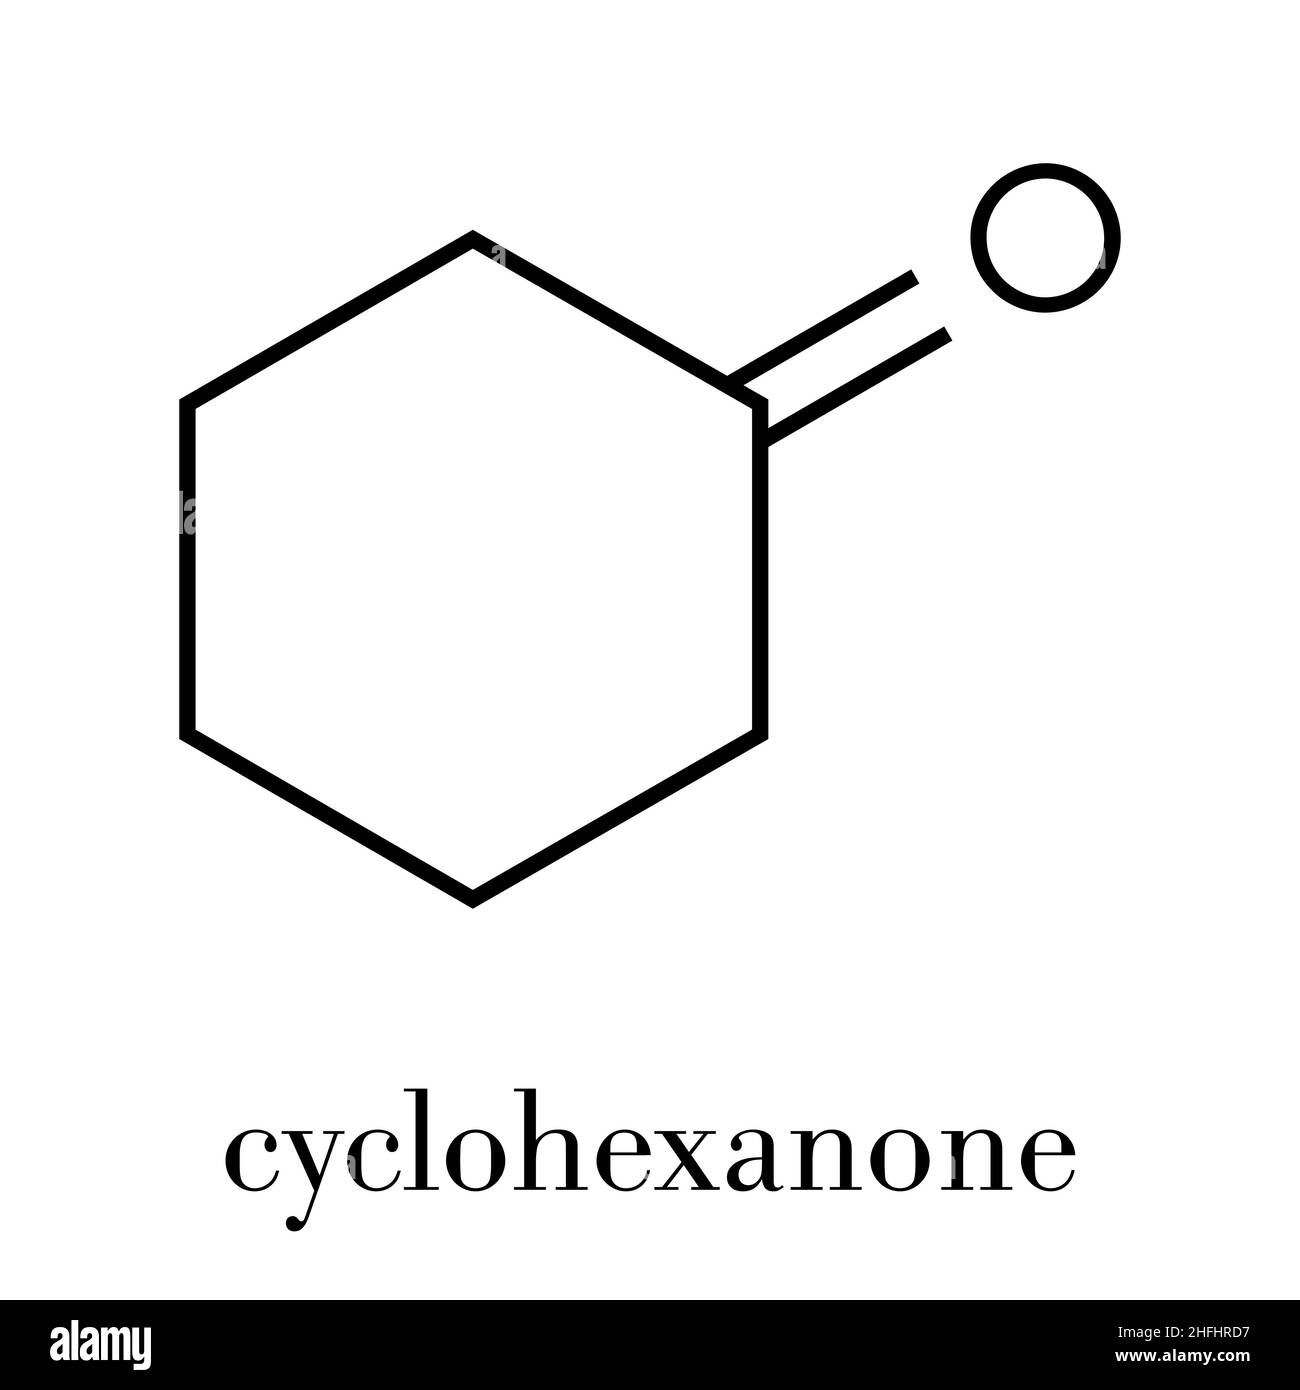 https://c8.alamy.com/comp/2HFHRD7/cyclohexanone-organic-solvent-molecule-precursor-of-nylon-skeletal-formula-2HFHRD7.jpg